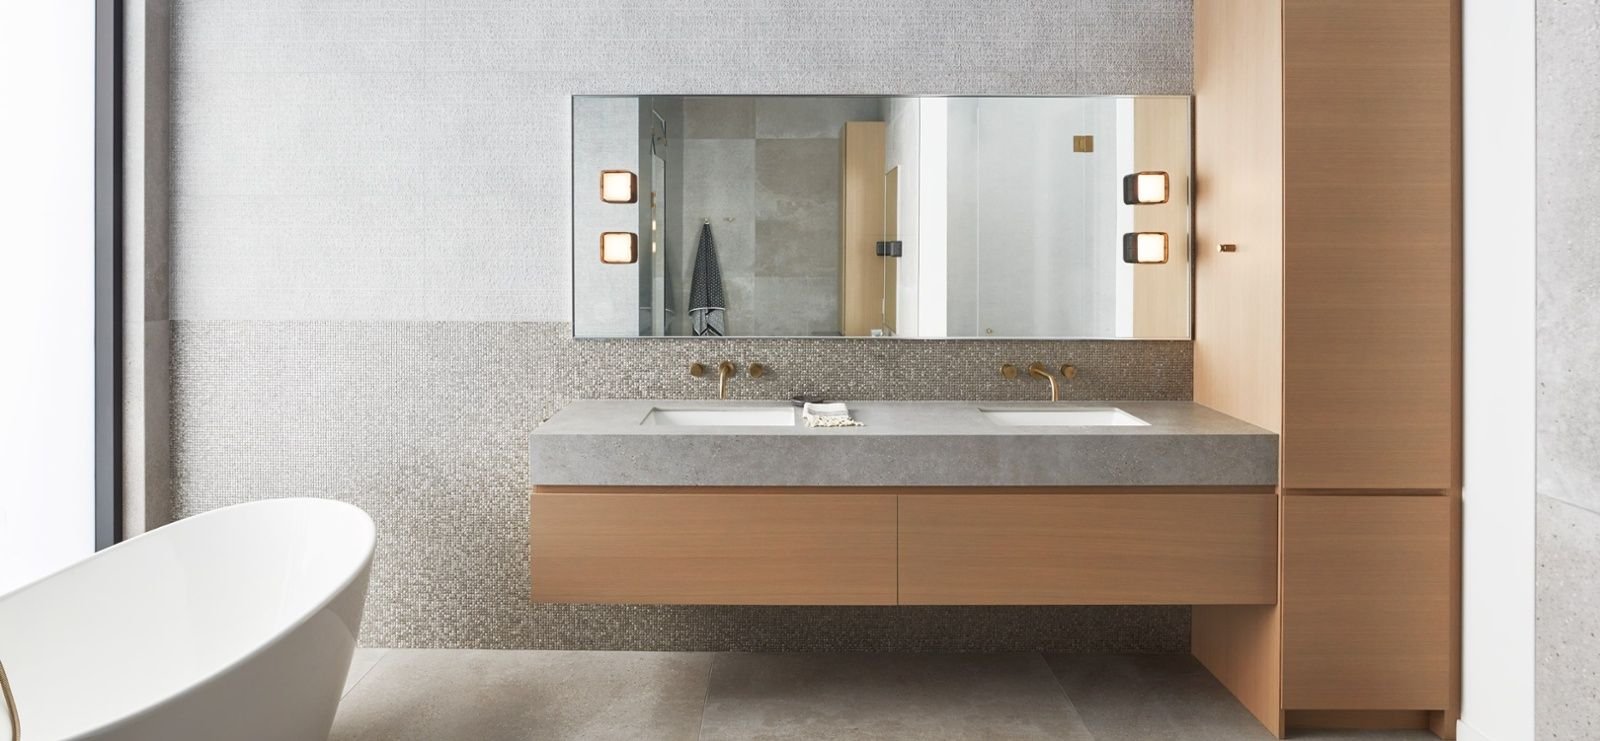 natural stone finishes in custom modern bathroom-1-1